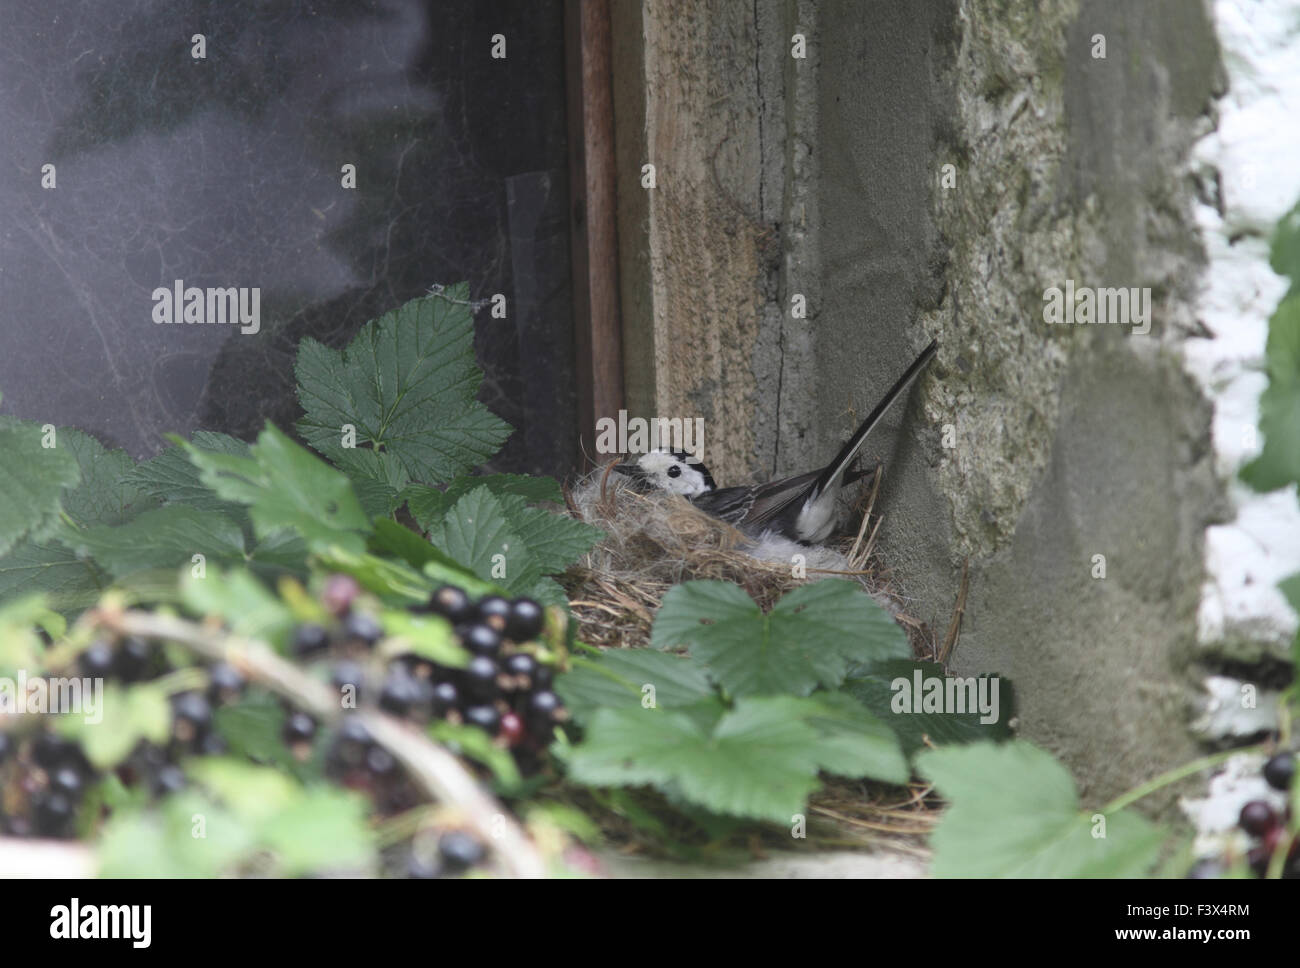 Pied wagtail Motacilla alba brooding small young in nest on barn windowsill carmarthenshre July 2015 Stock Photo